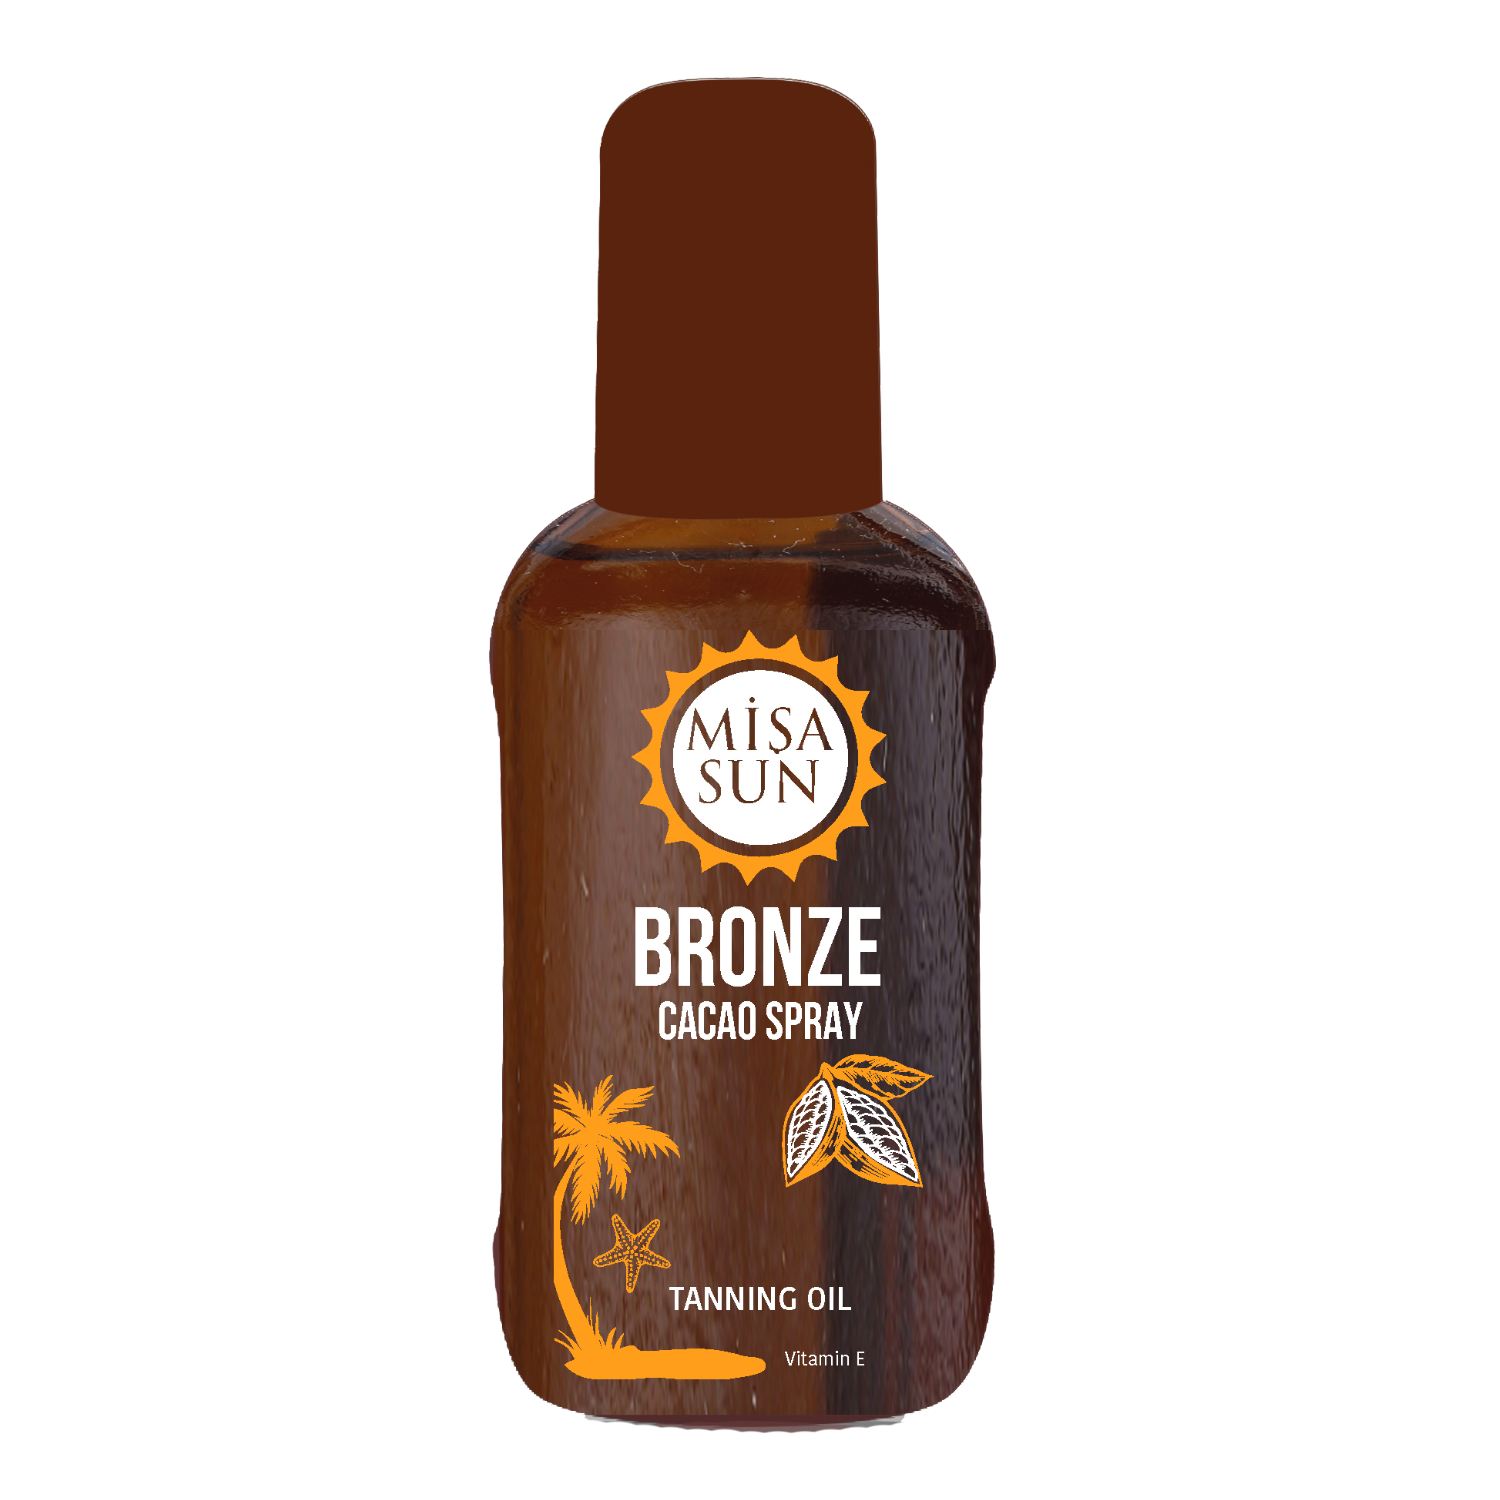 Mişa Sun Bronze Cacao Spray 200ml